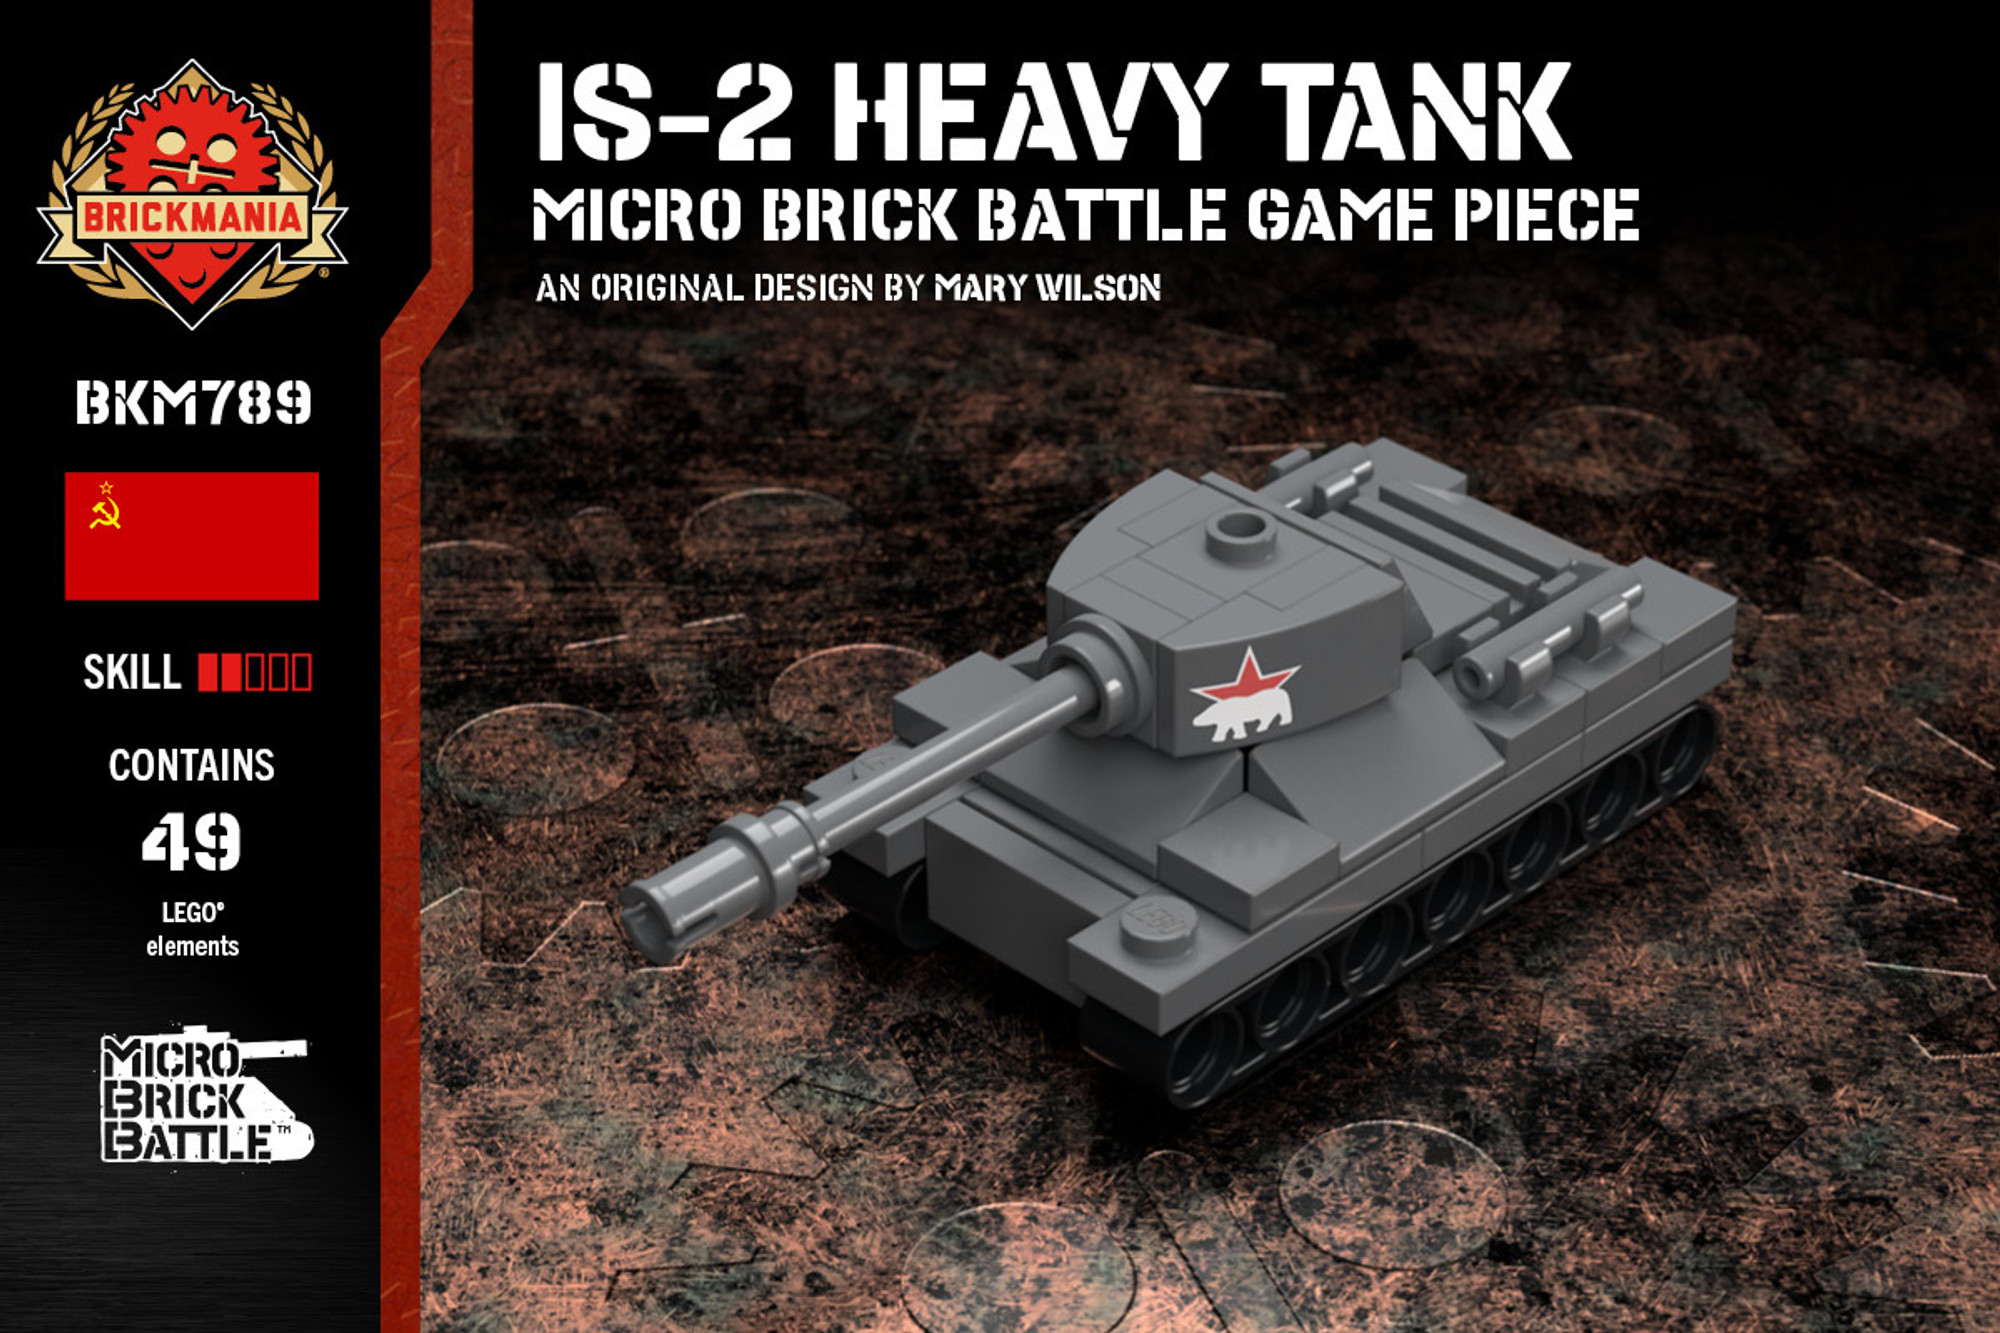 IS-2 Heavy Tank Micro Brick Battle Game Piece